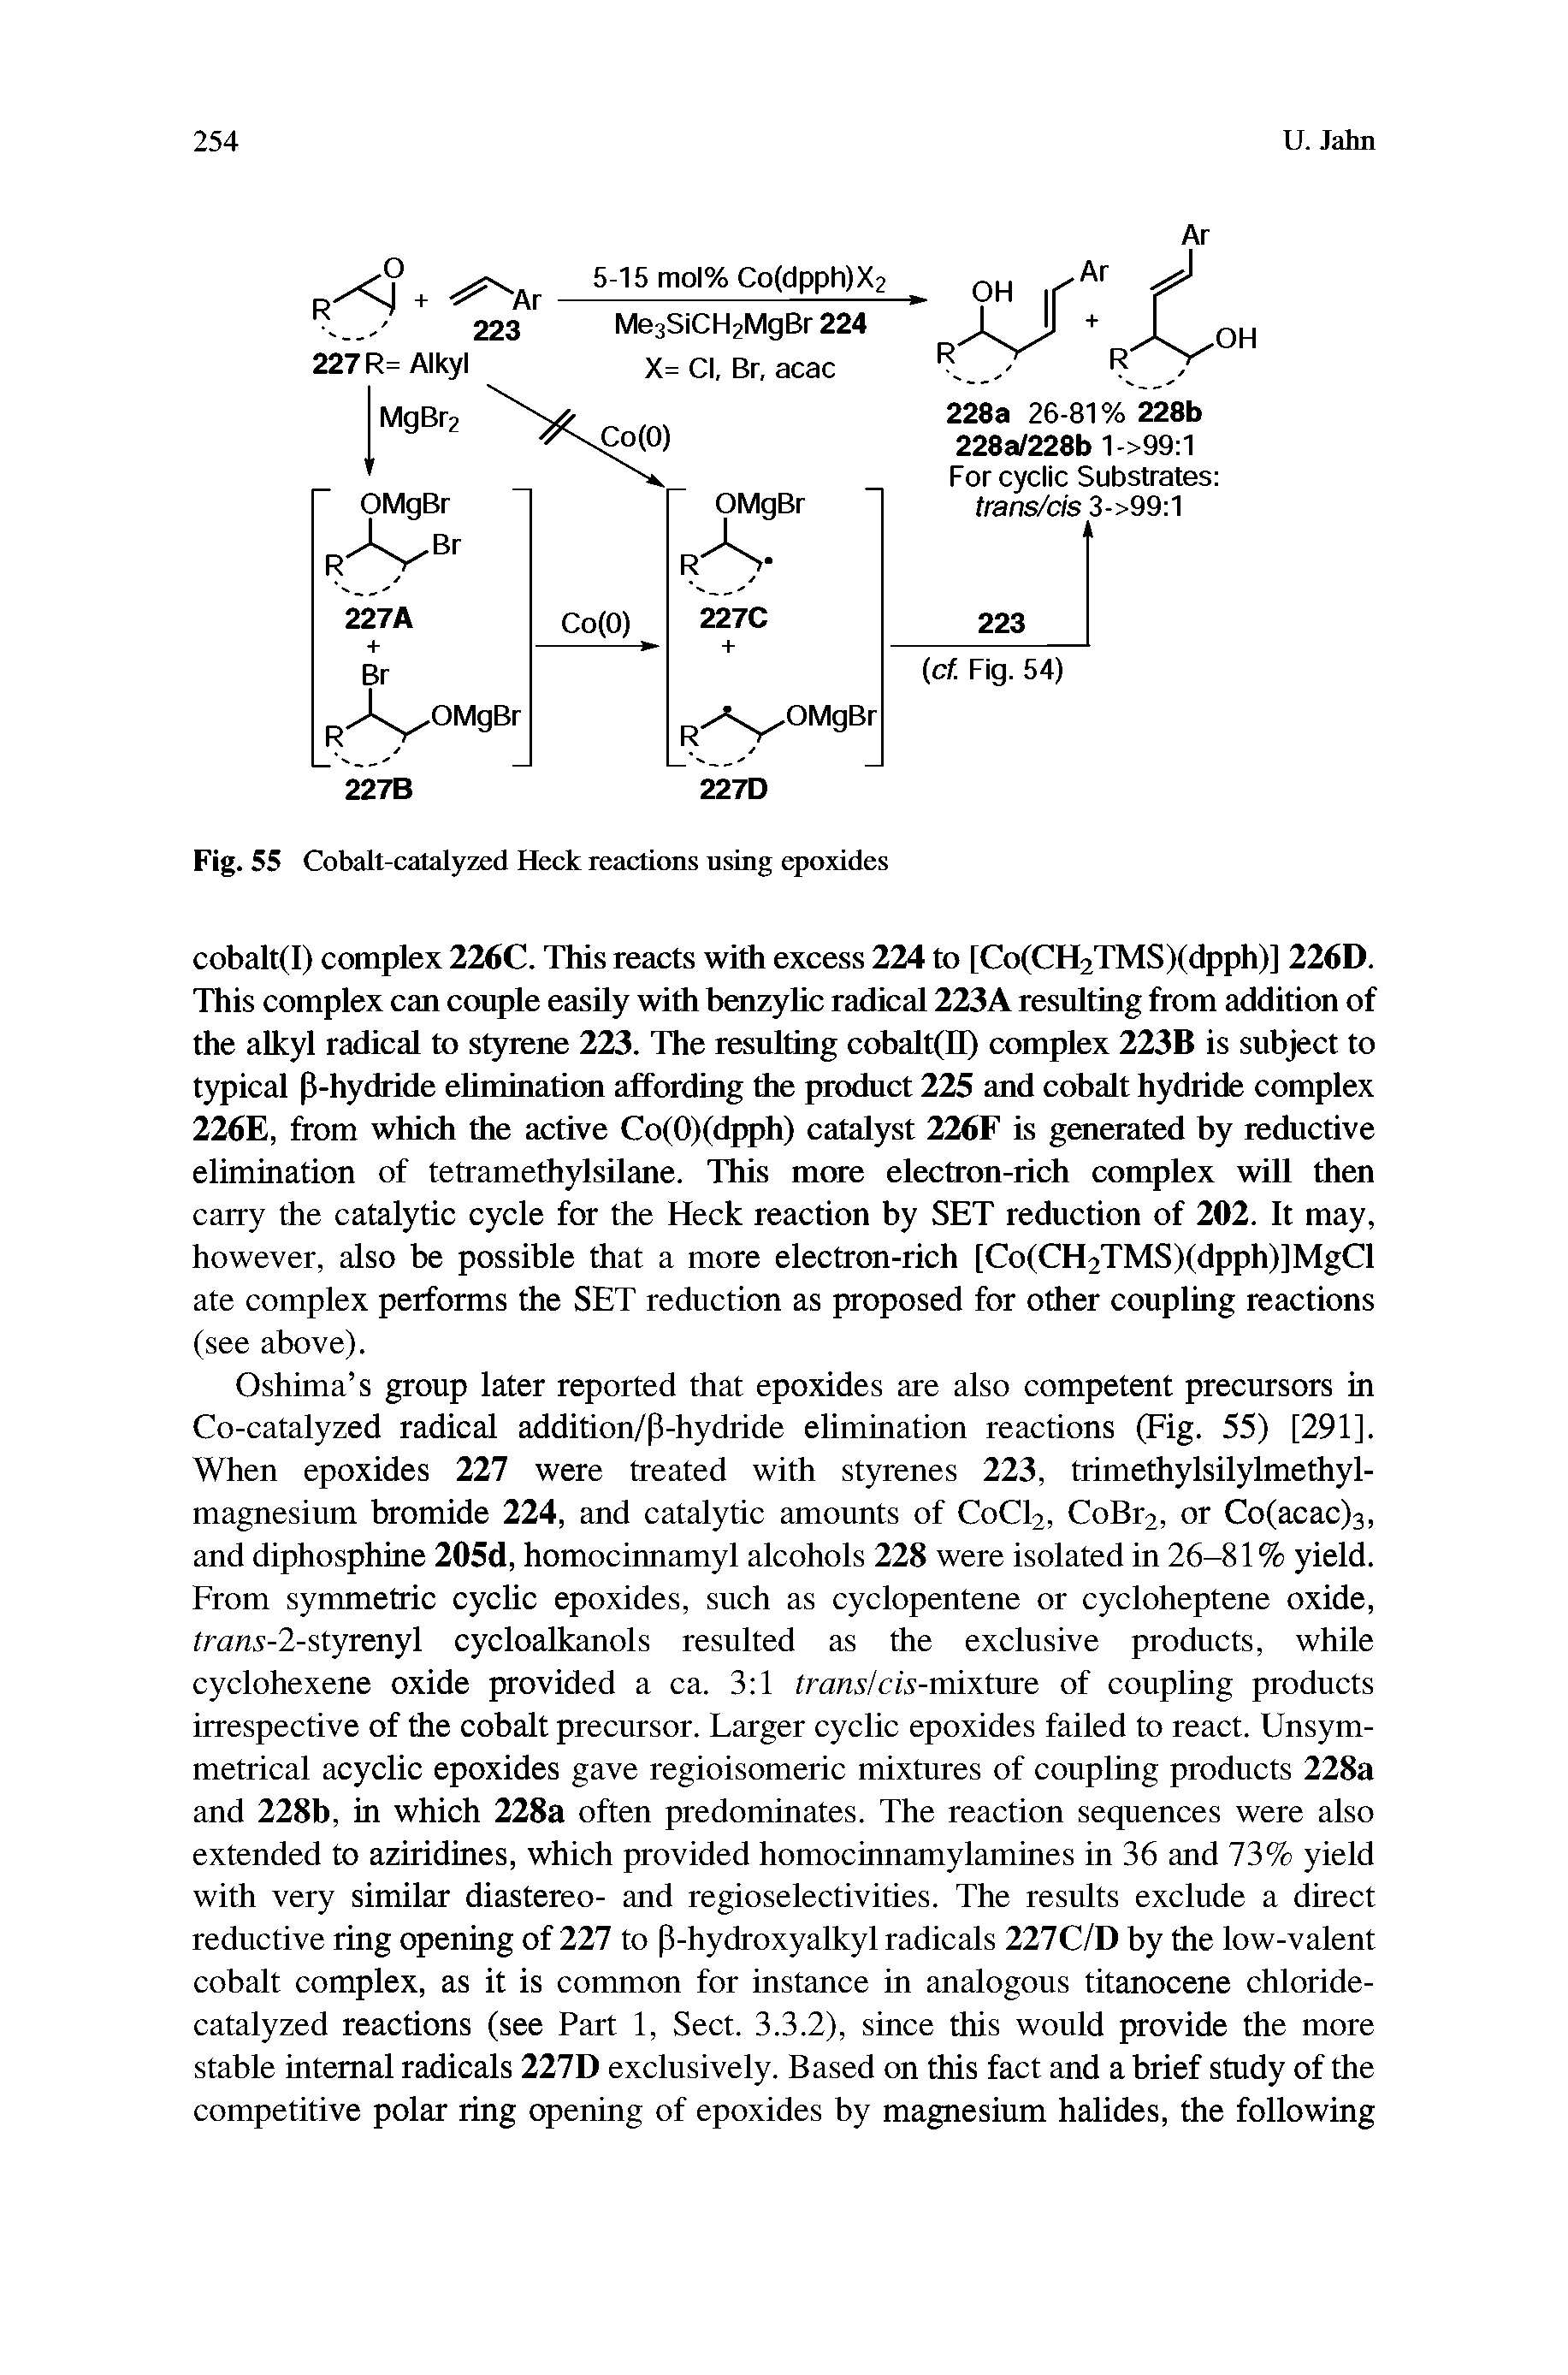 Fig. 55 Cobalt-catalyzed Fleck reactions using epoxides...